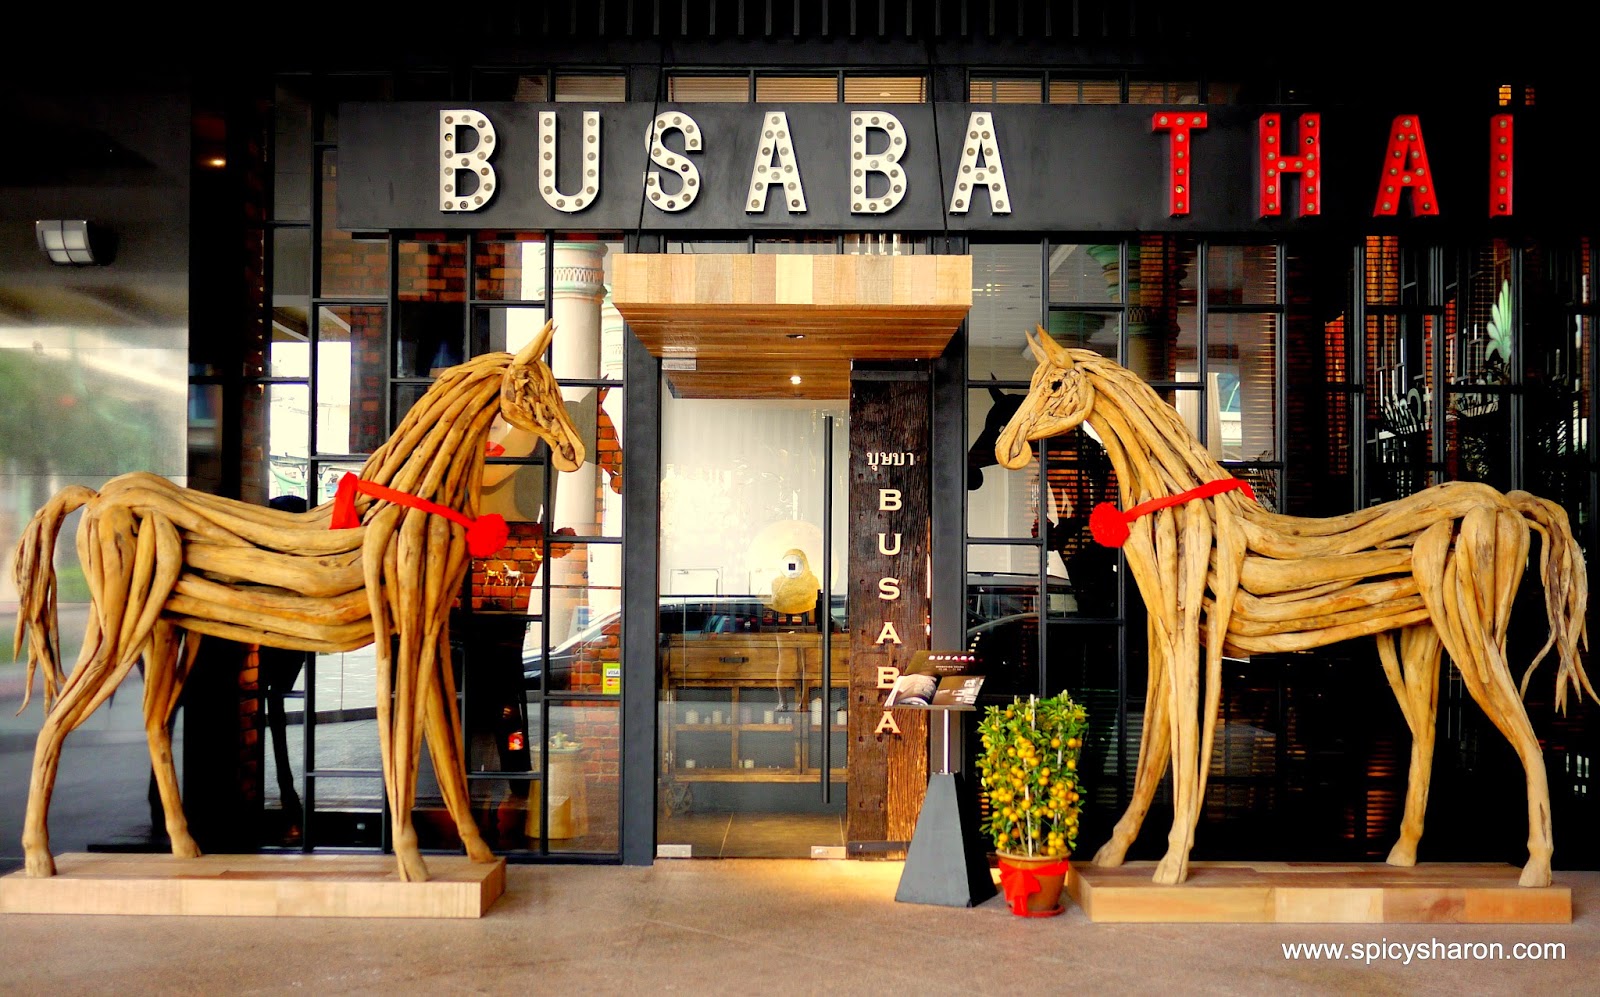 Busaba BSC